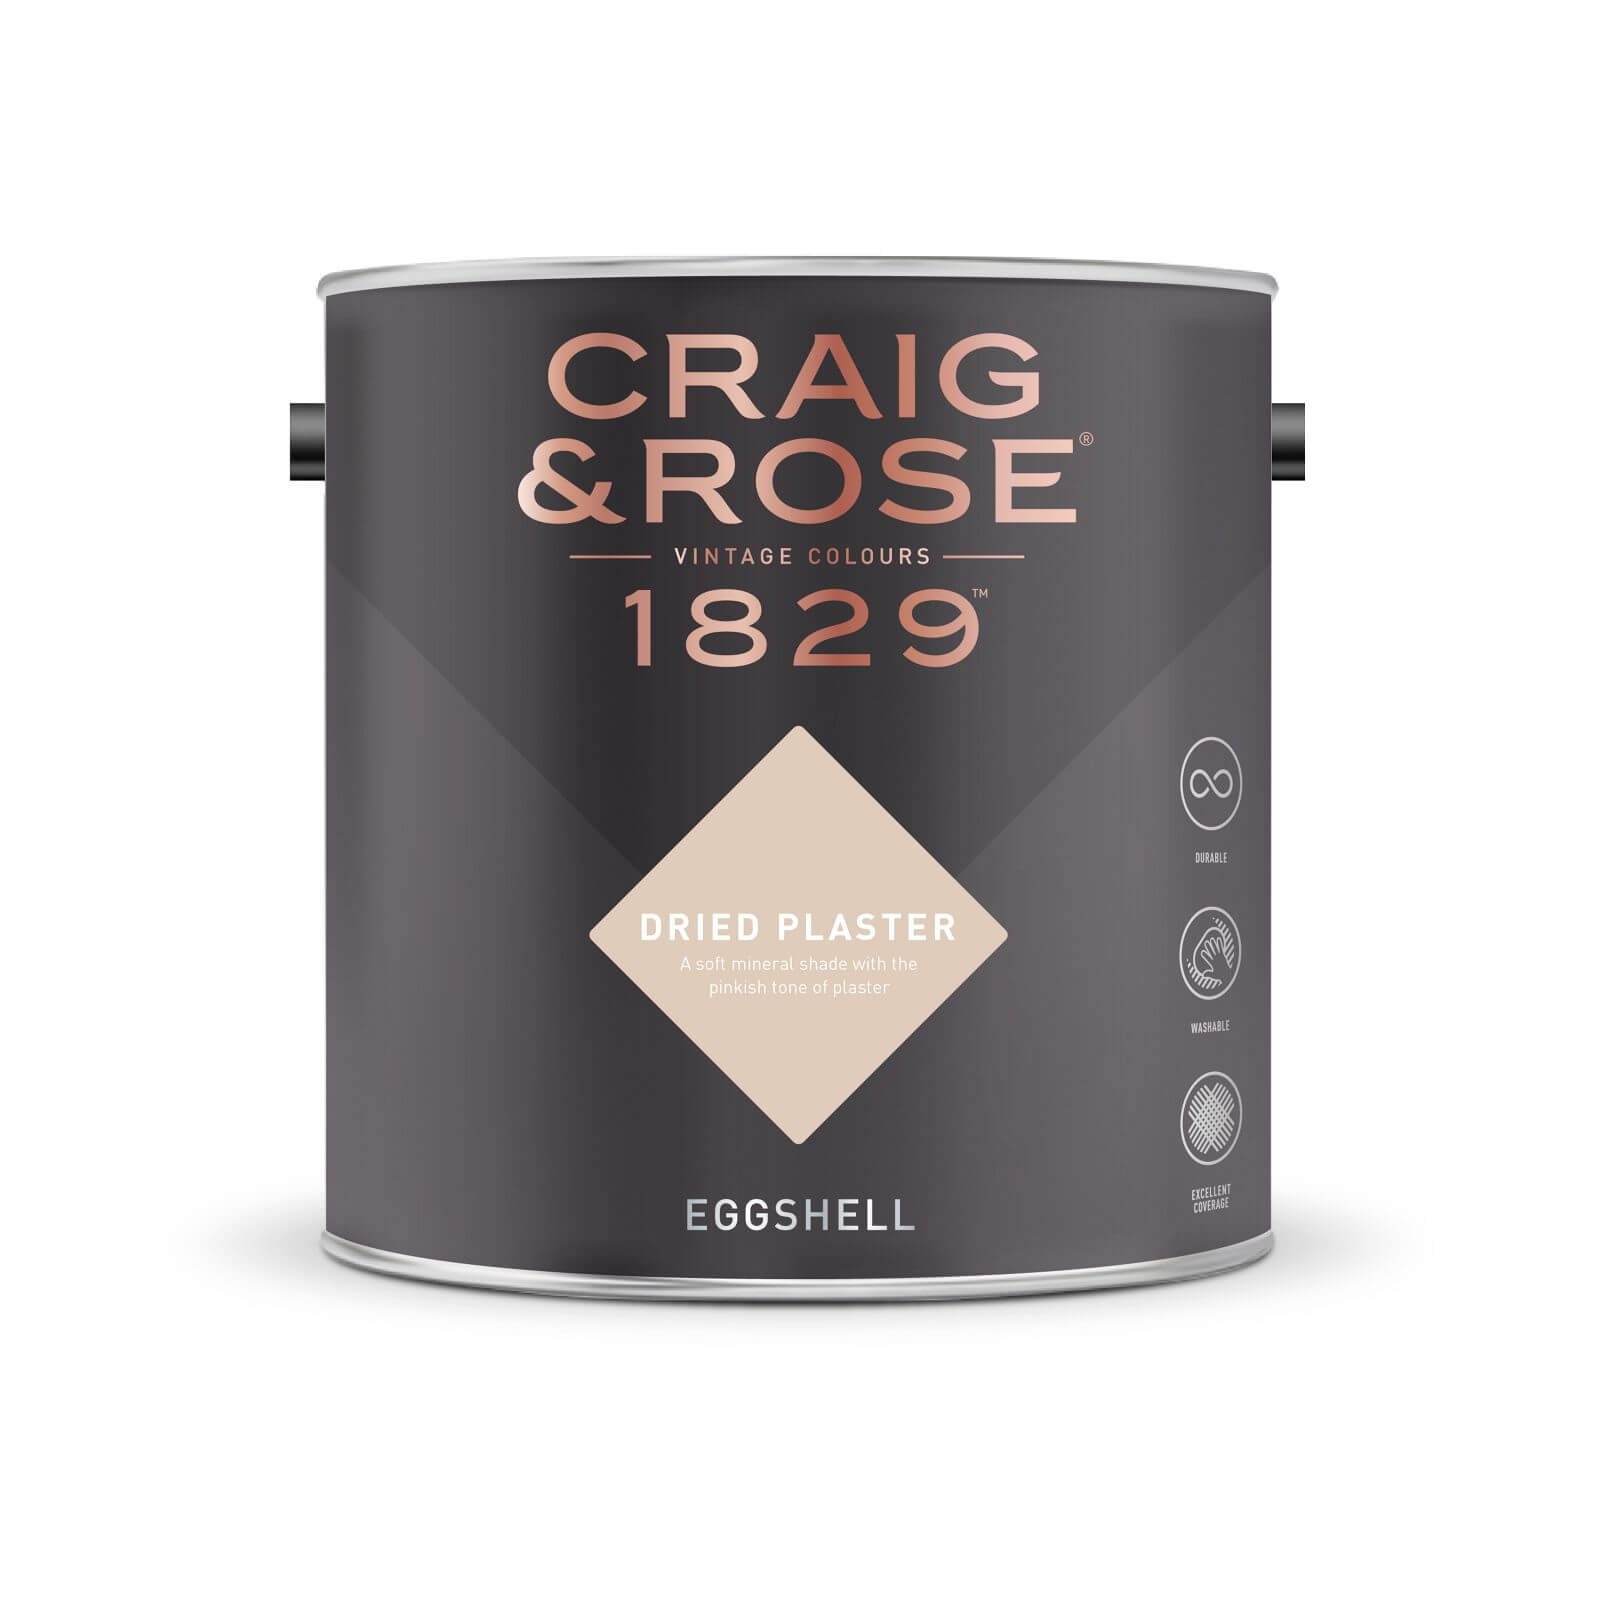 Craig & Rose 1829 Eggshell Paint Dried Plaster - 2.5L